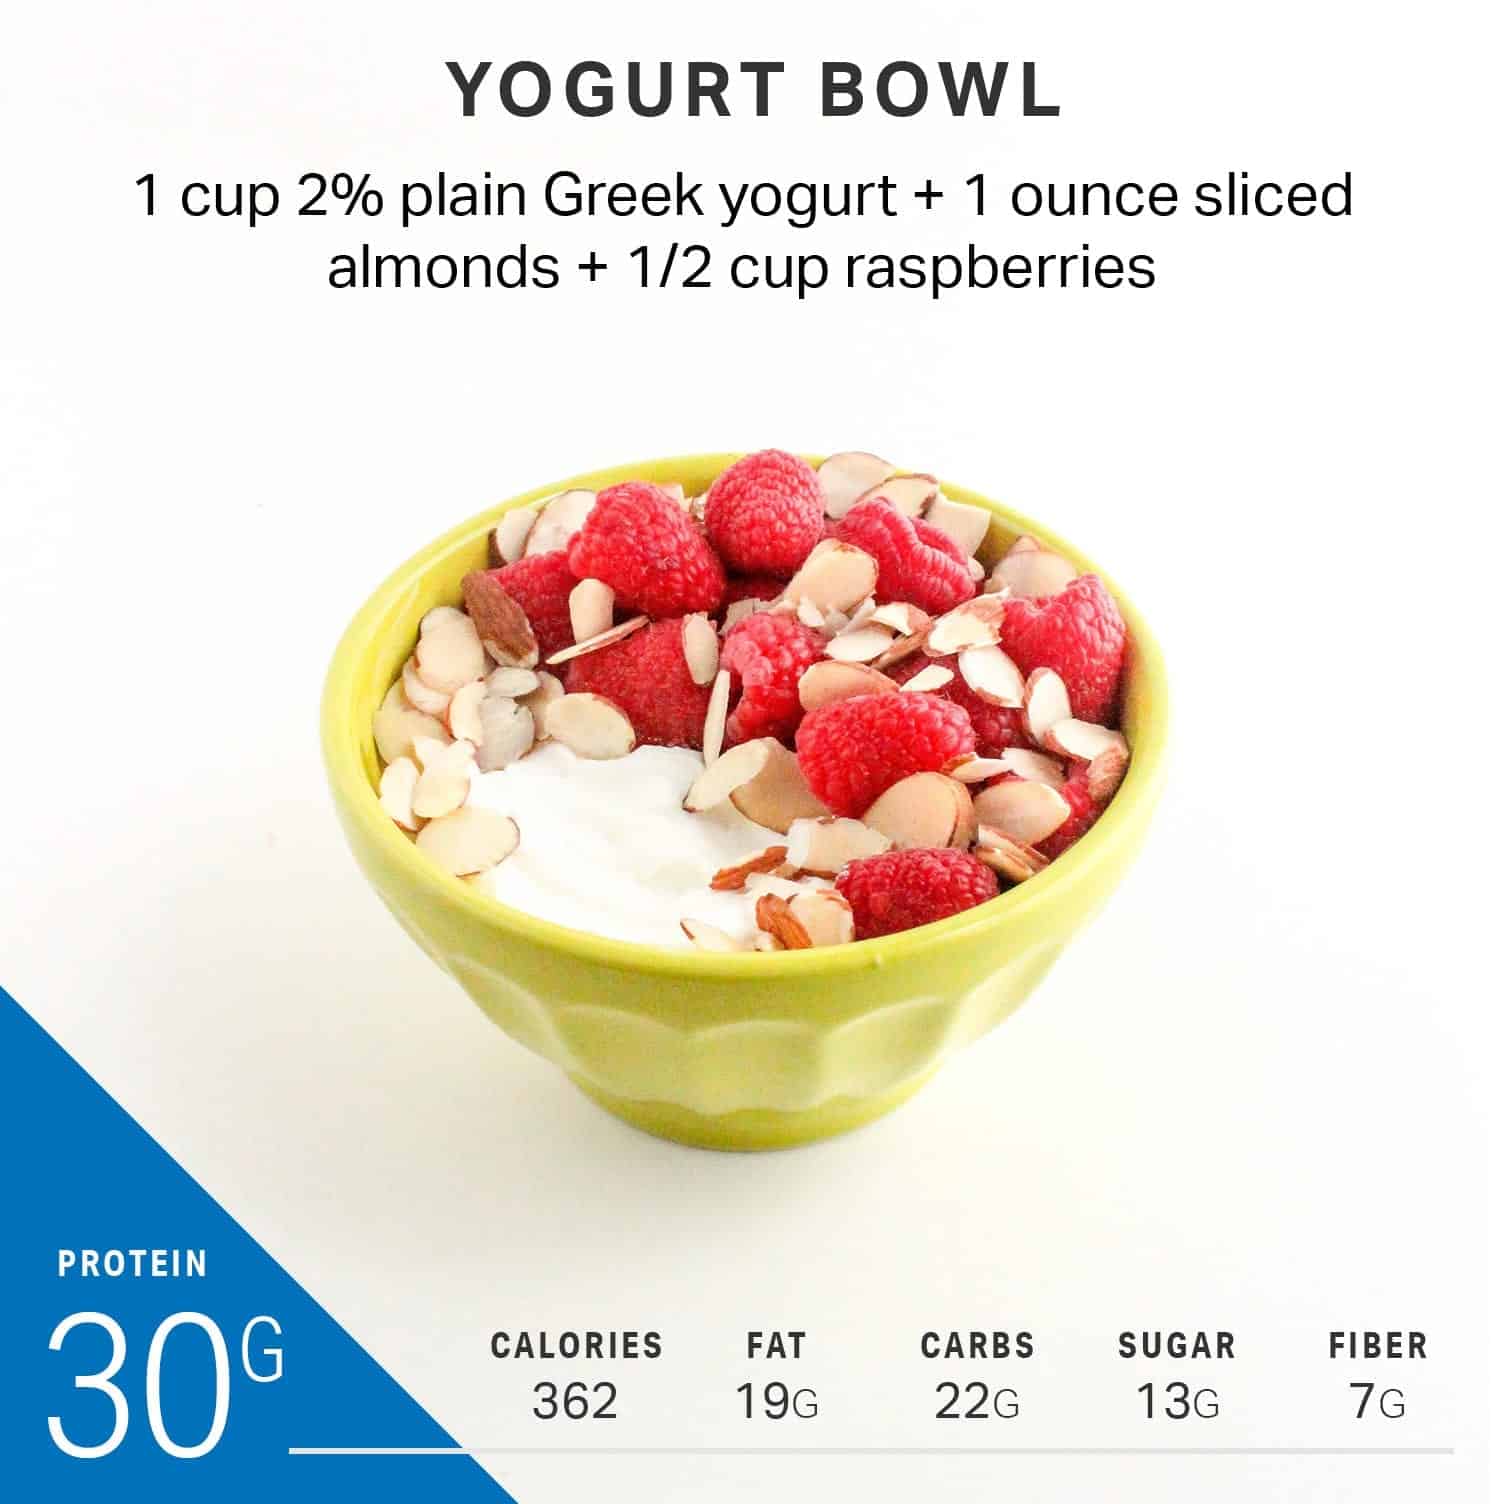 Йогурт 30 грамм белка. Протеиновый йогурт калории. High Protein 30 грамм белка йогурт. Йогурт белорусский с 30грам.белка. 30 грамм протеина